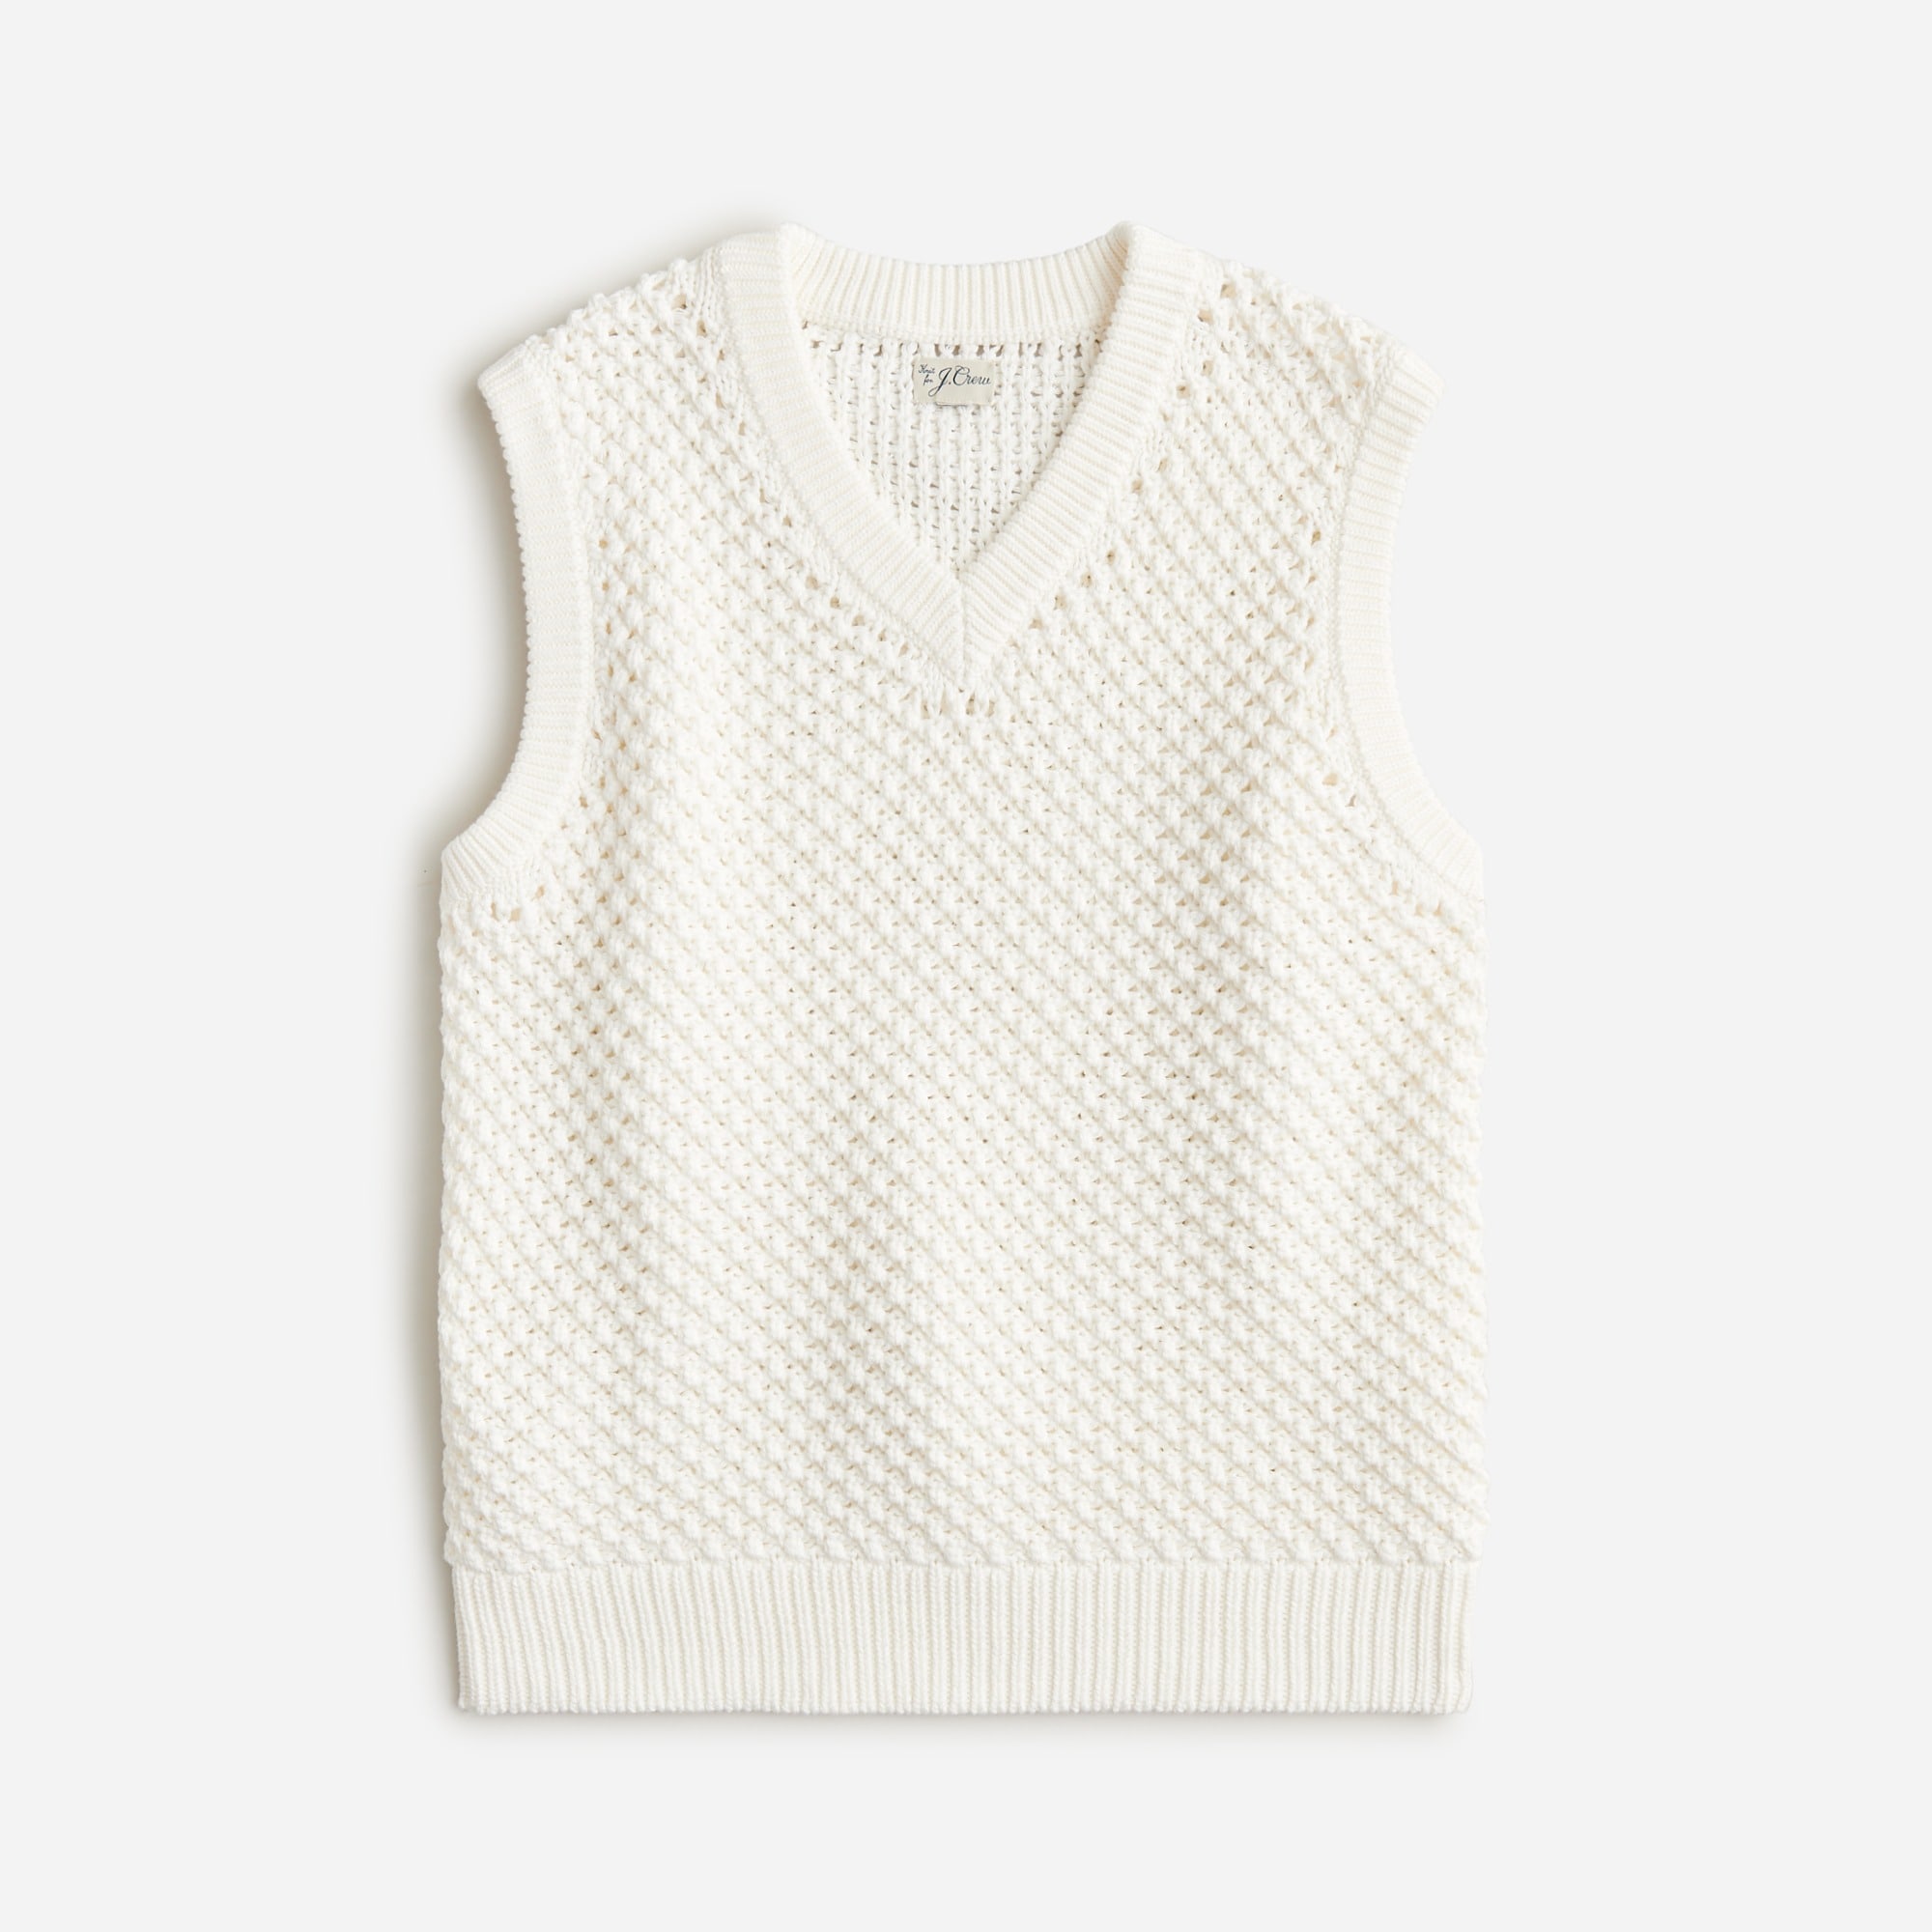 mens Cotton berry-stitch sweater-vest